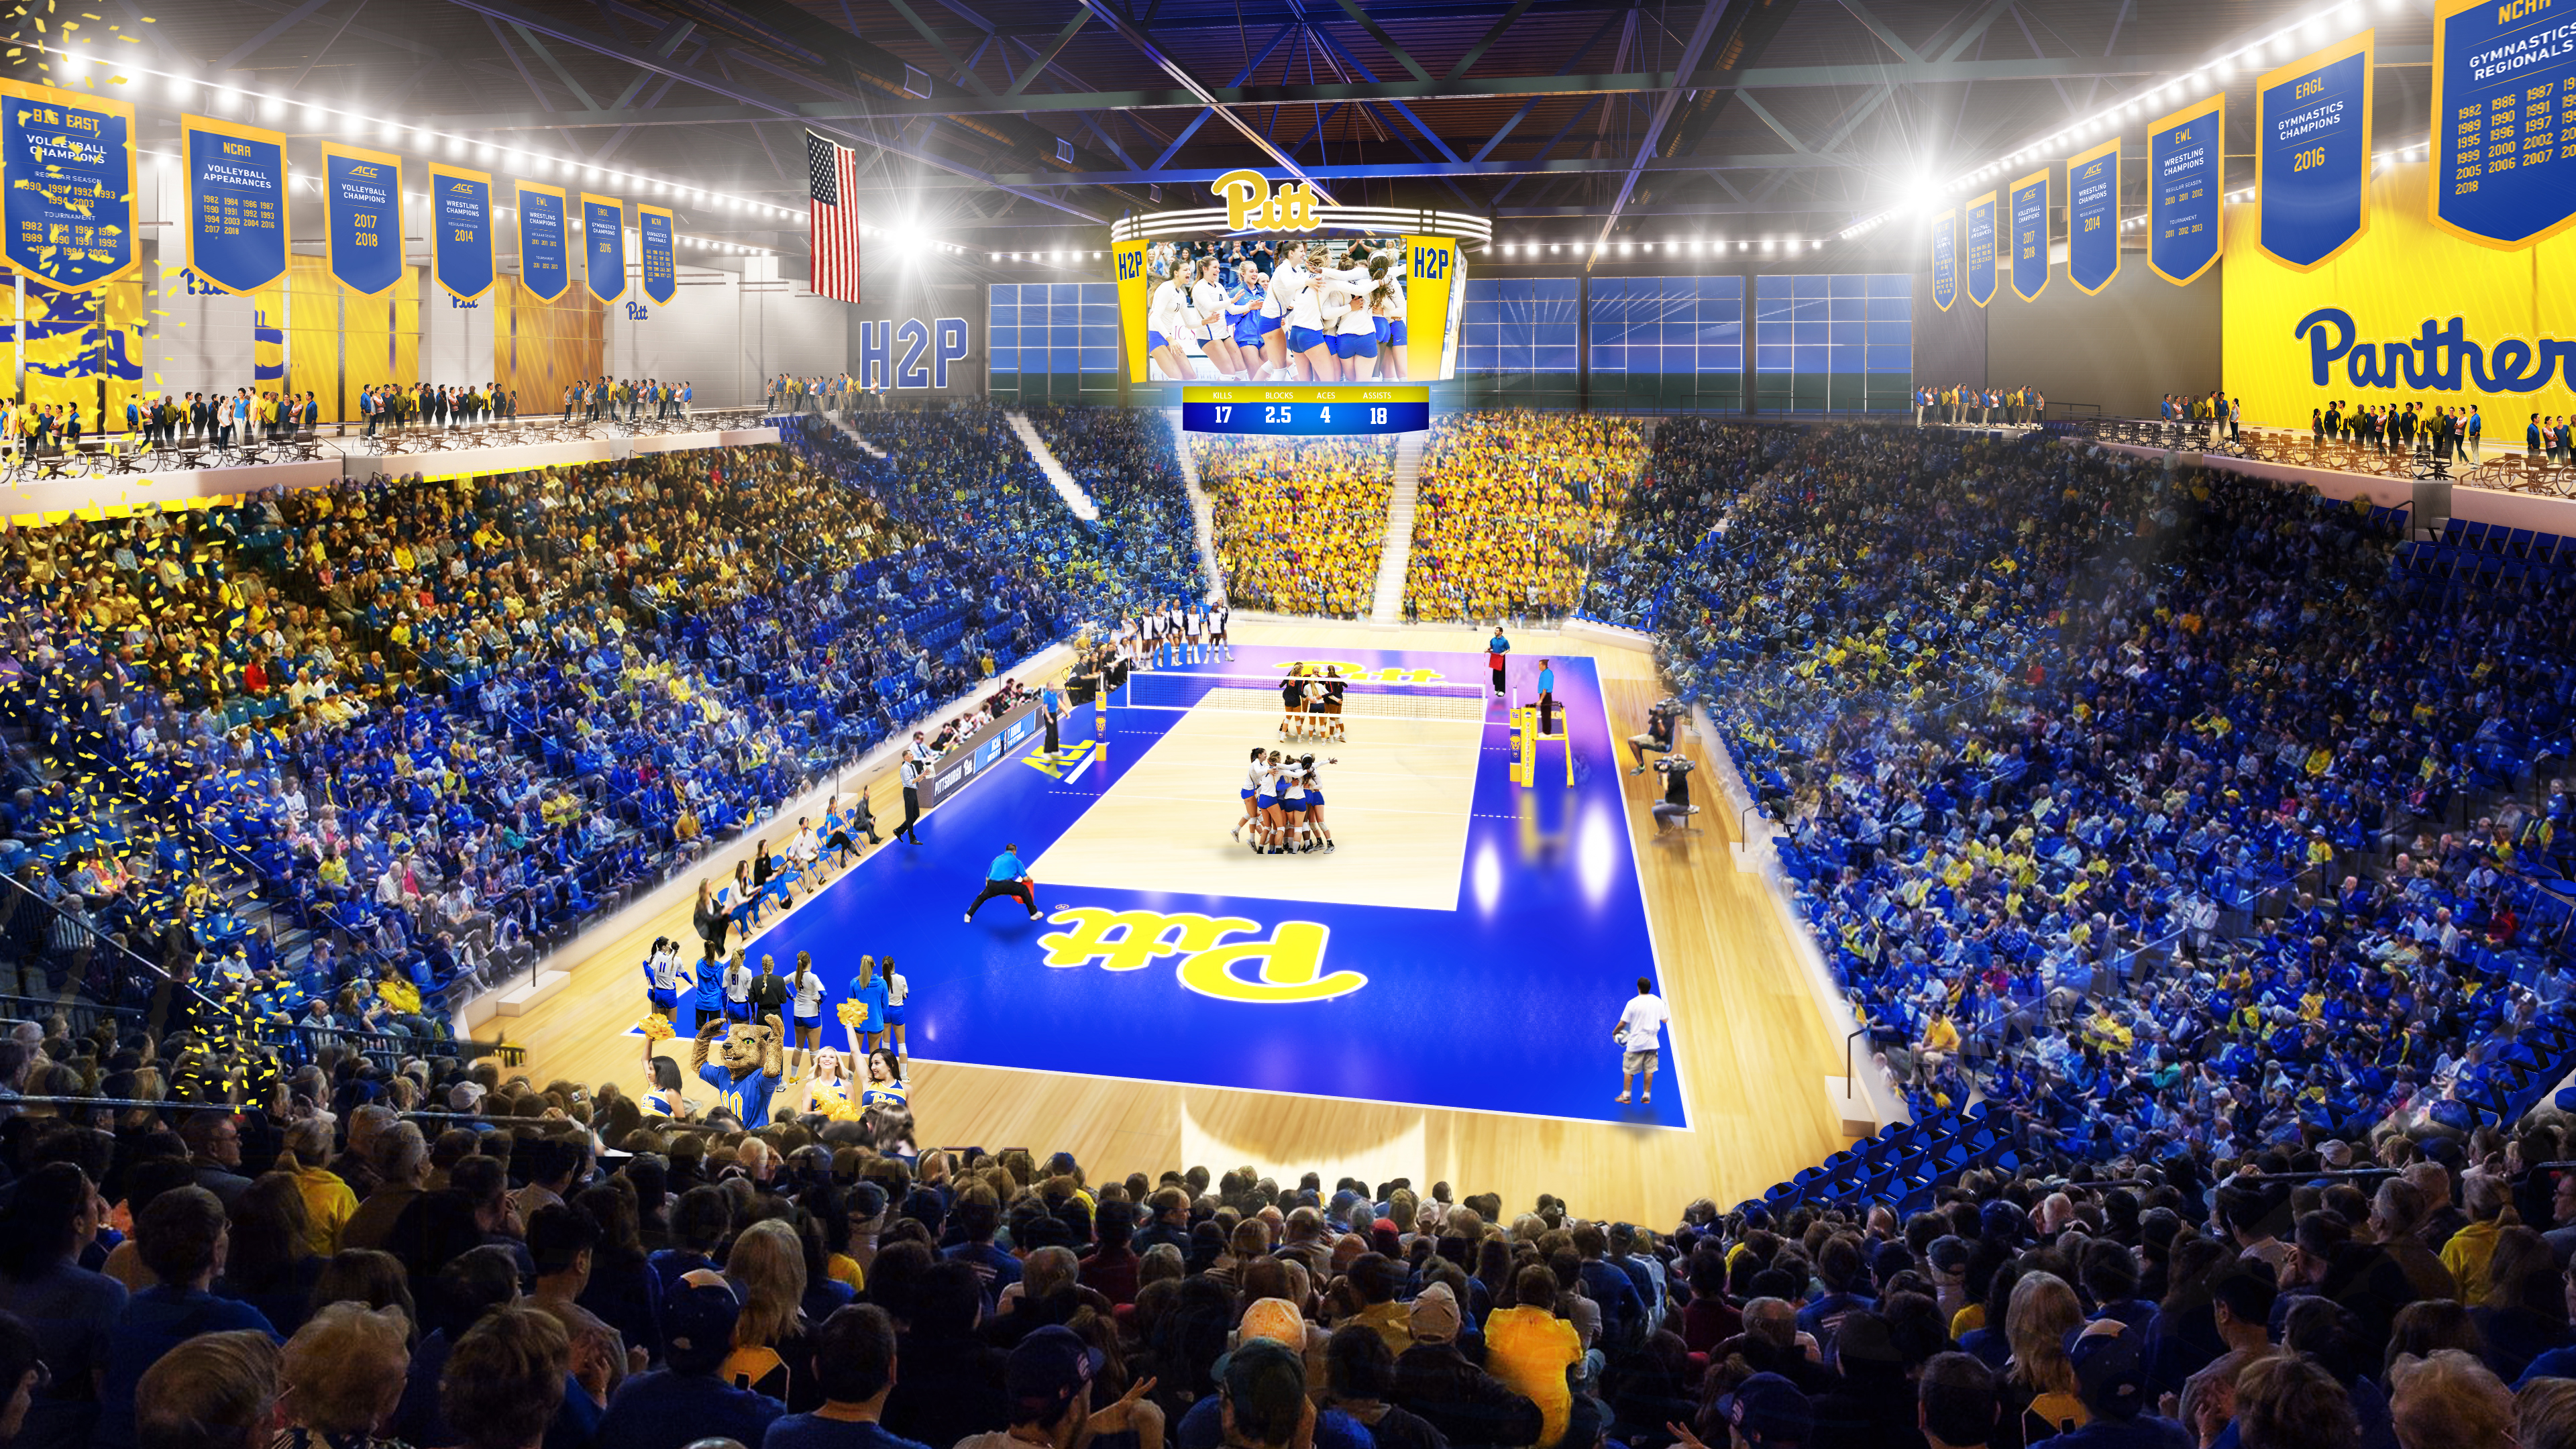 Image of Pitt Arena